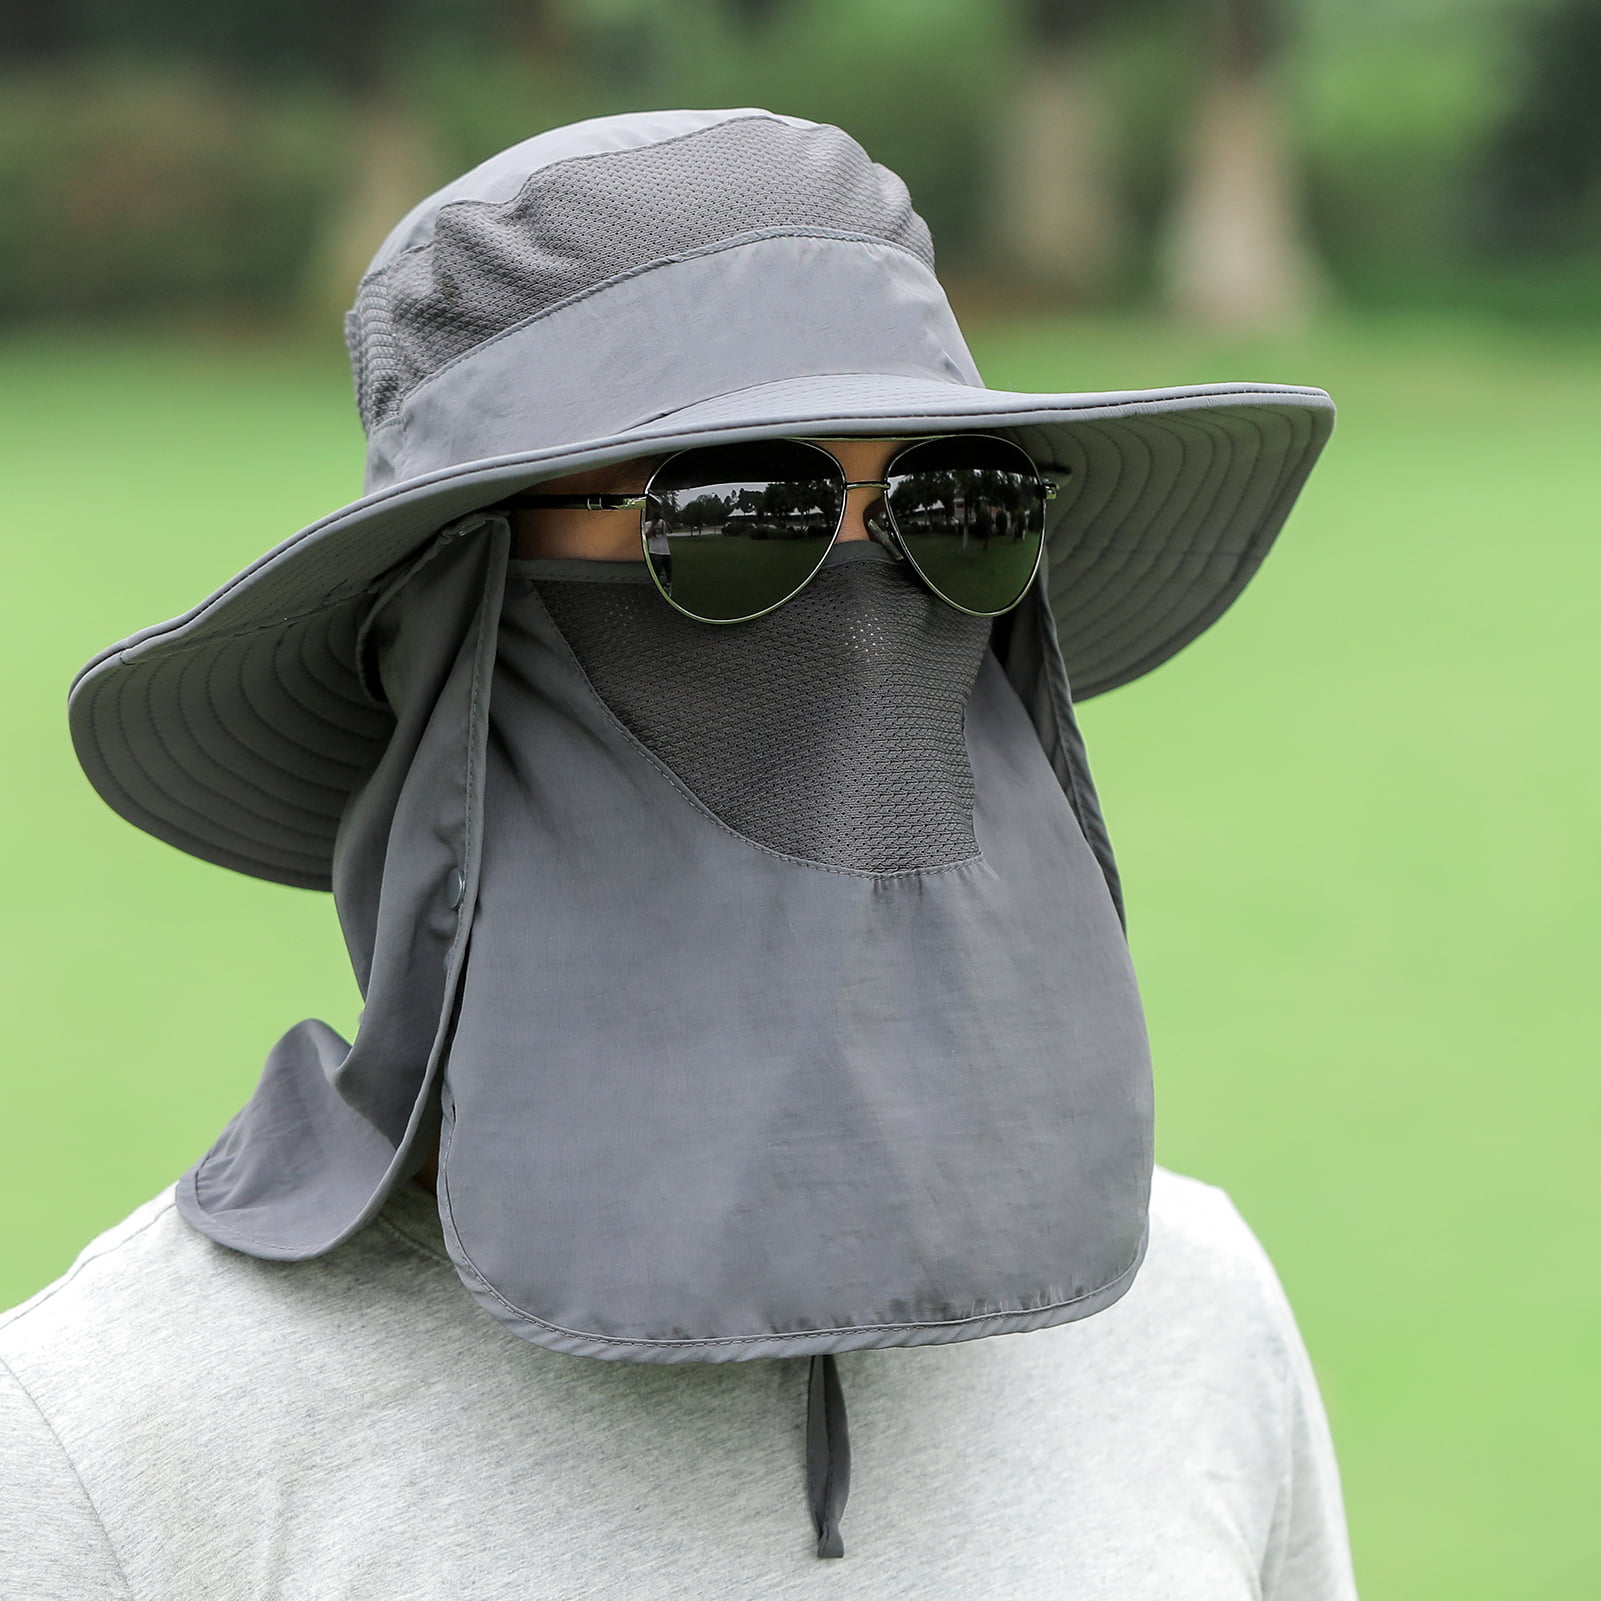 Gecheer Detachable Neck Flap Sun Hat Wide Brim Face Cover for Men Women  Fishing Travel Cap 